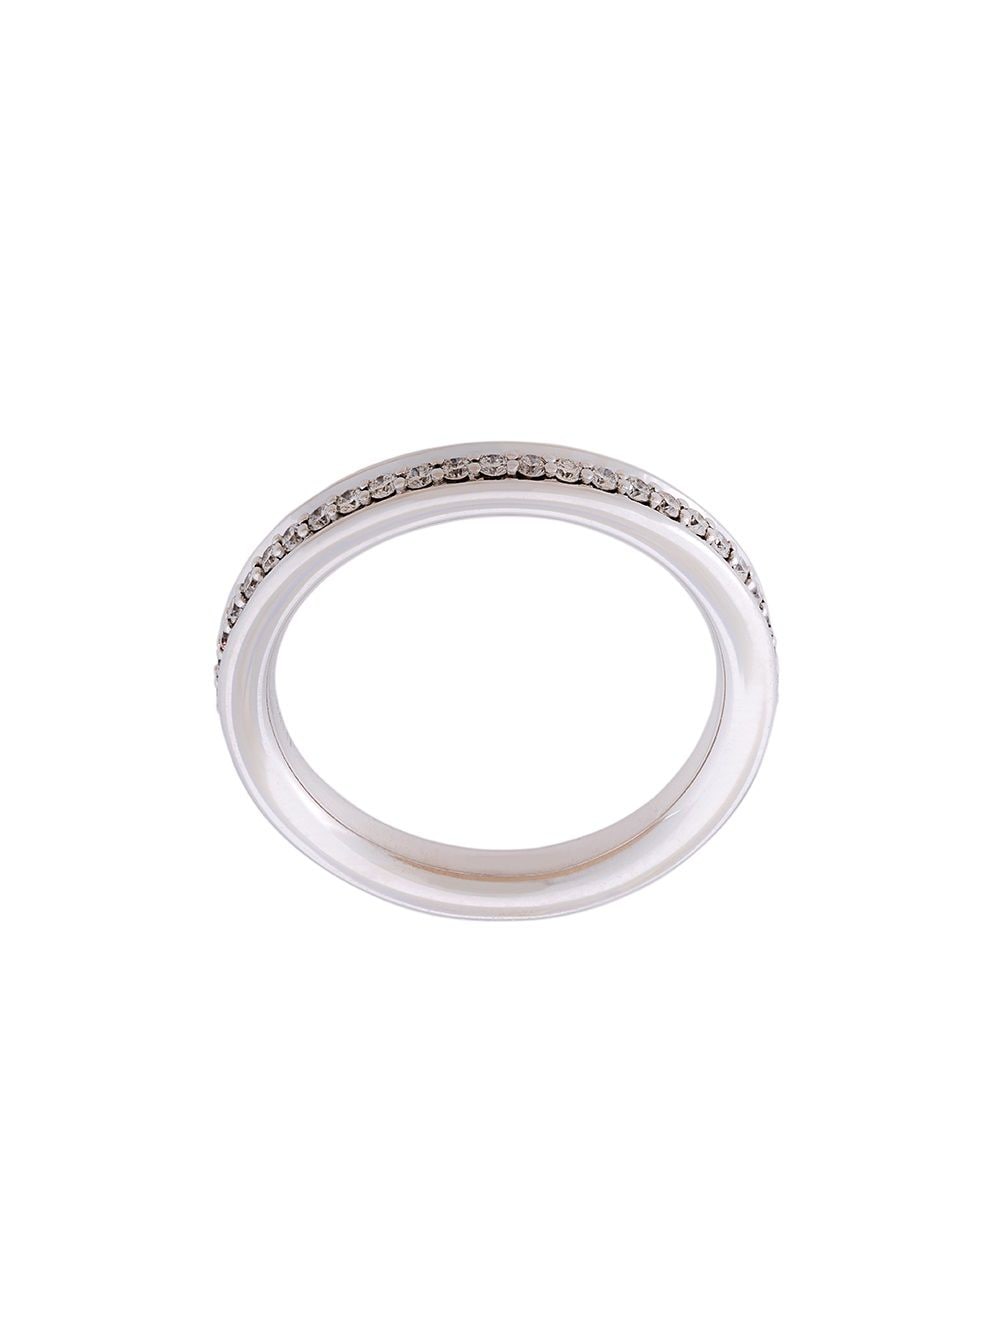 ALINKA 'Tania' thumb ring diamond full surround - Metallic von ALINKA